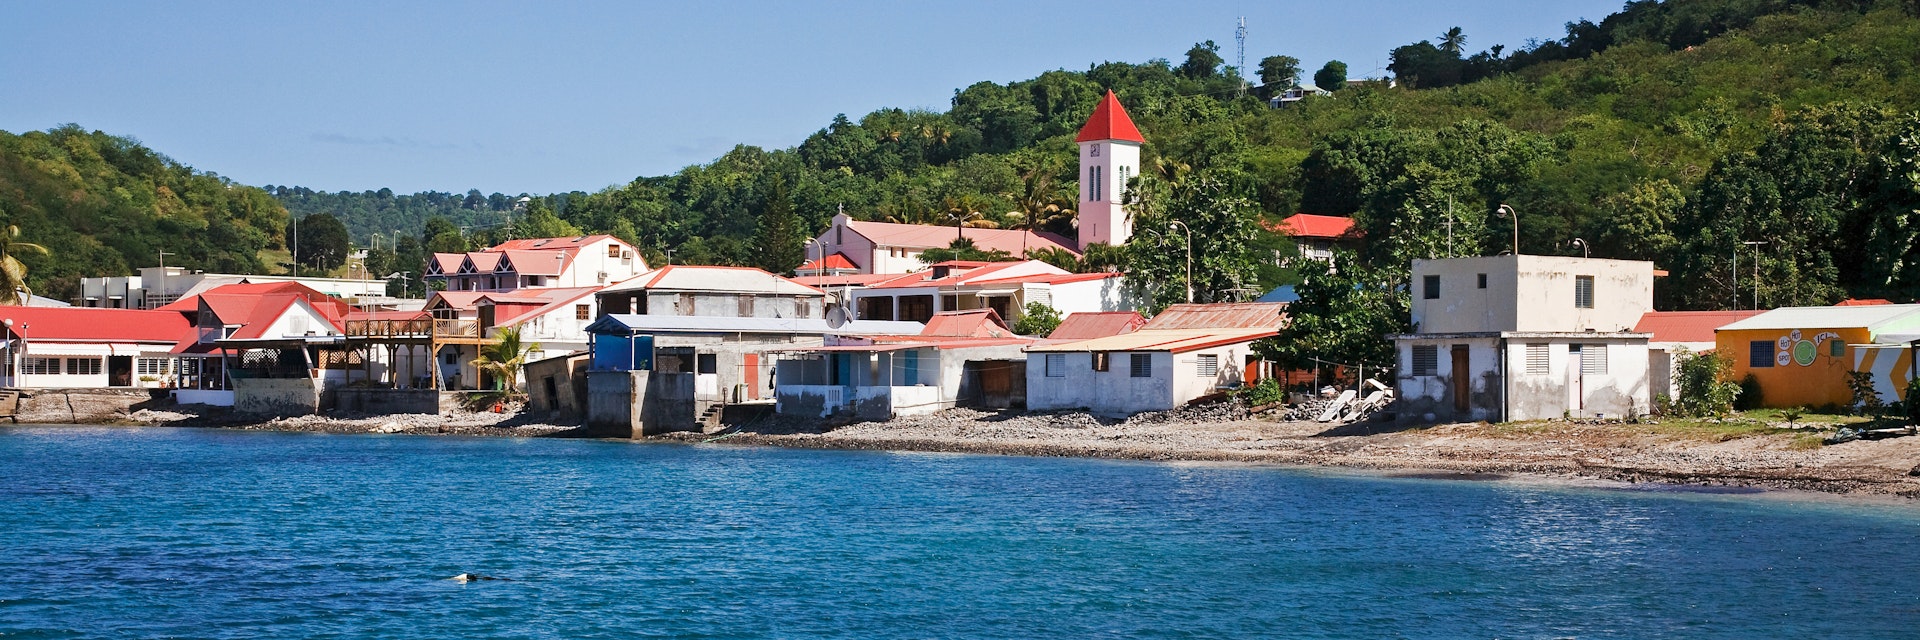 Townscape of Deshaies, Deshaies, Arrondissement of Basse-Terre, Guadeloupe, France